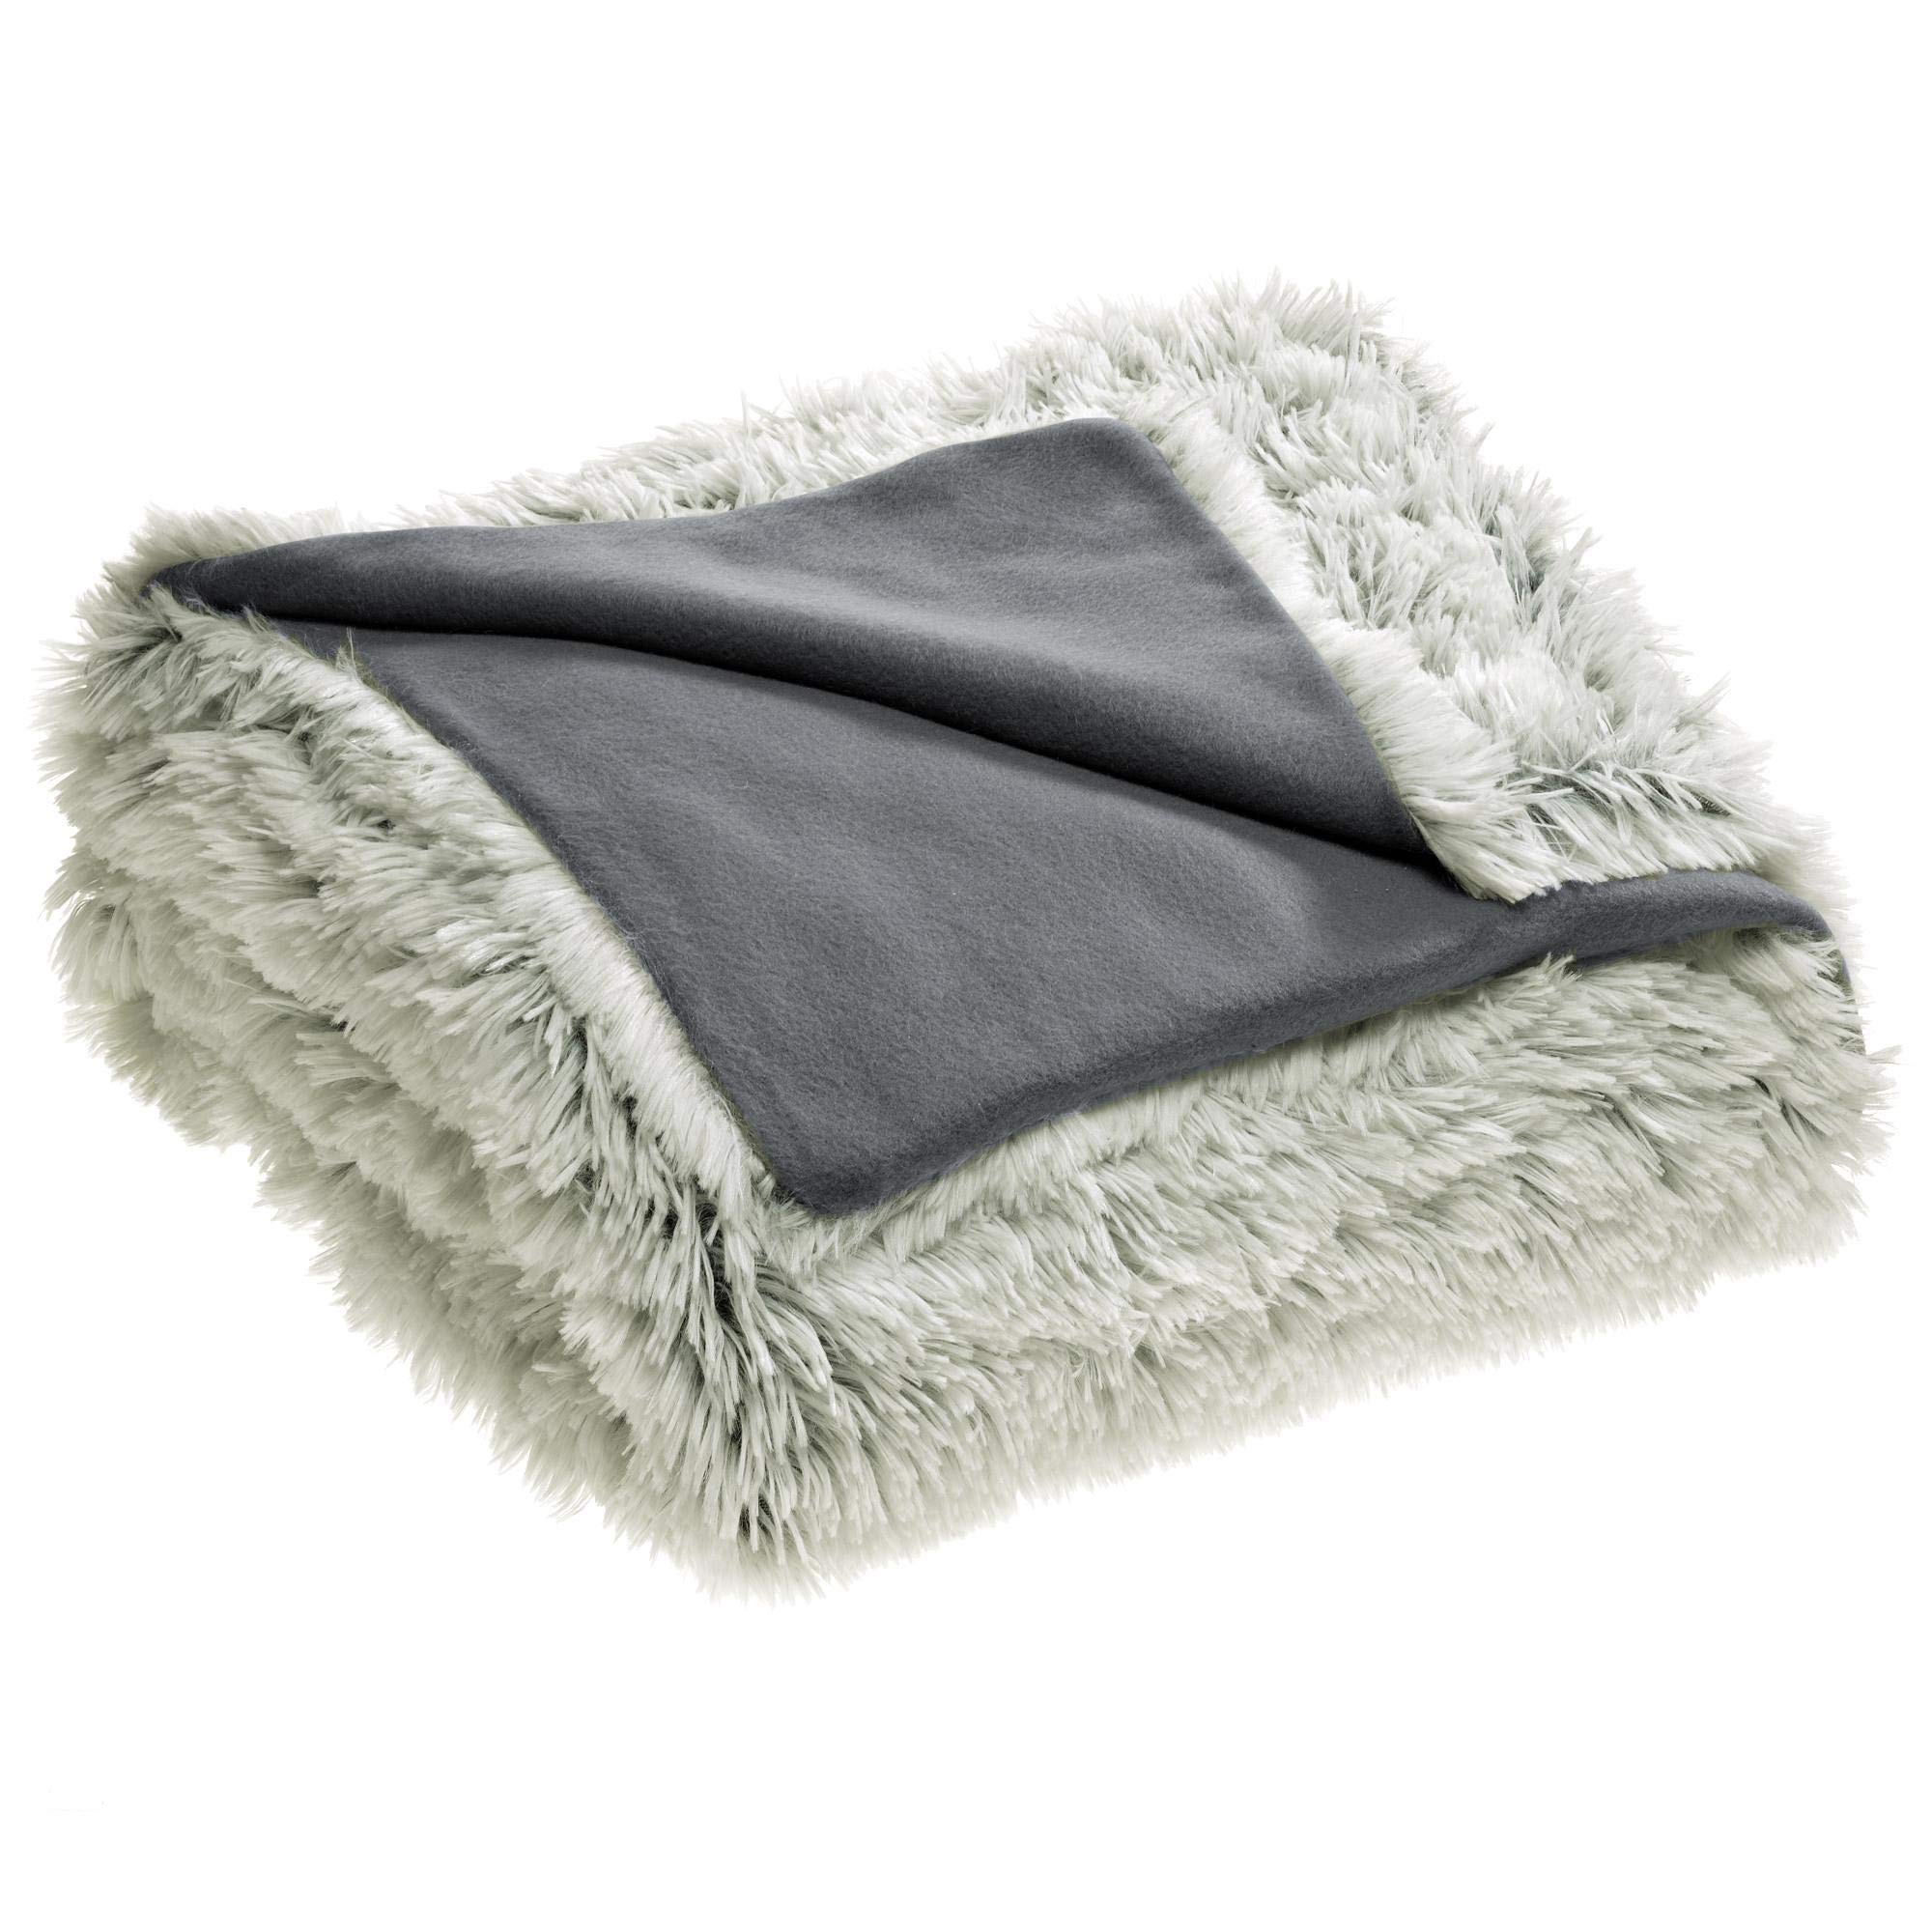 CelinaTex Shetland Bettwäsche 200 x 200 cm 3-teilig Creme grau Polar-Fleece Bettbezug Flokati Optik Bett Garnitur